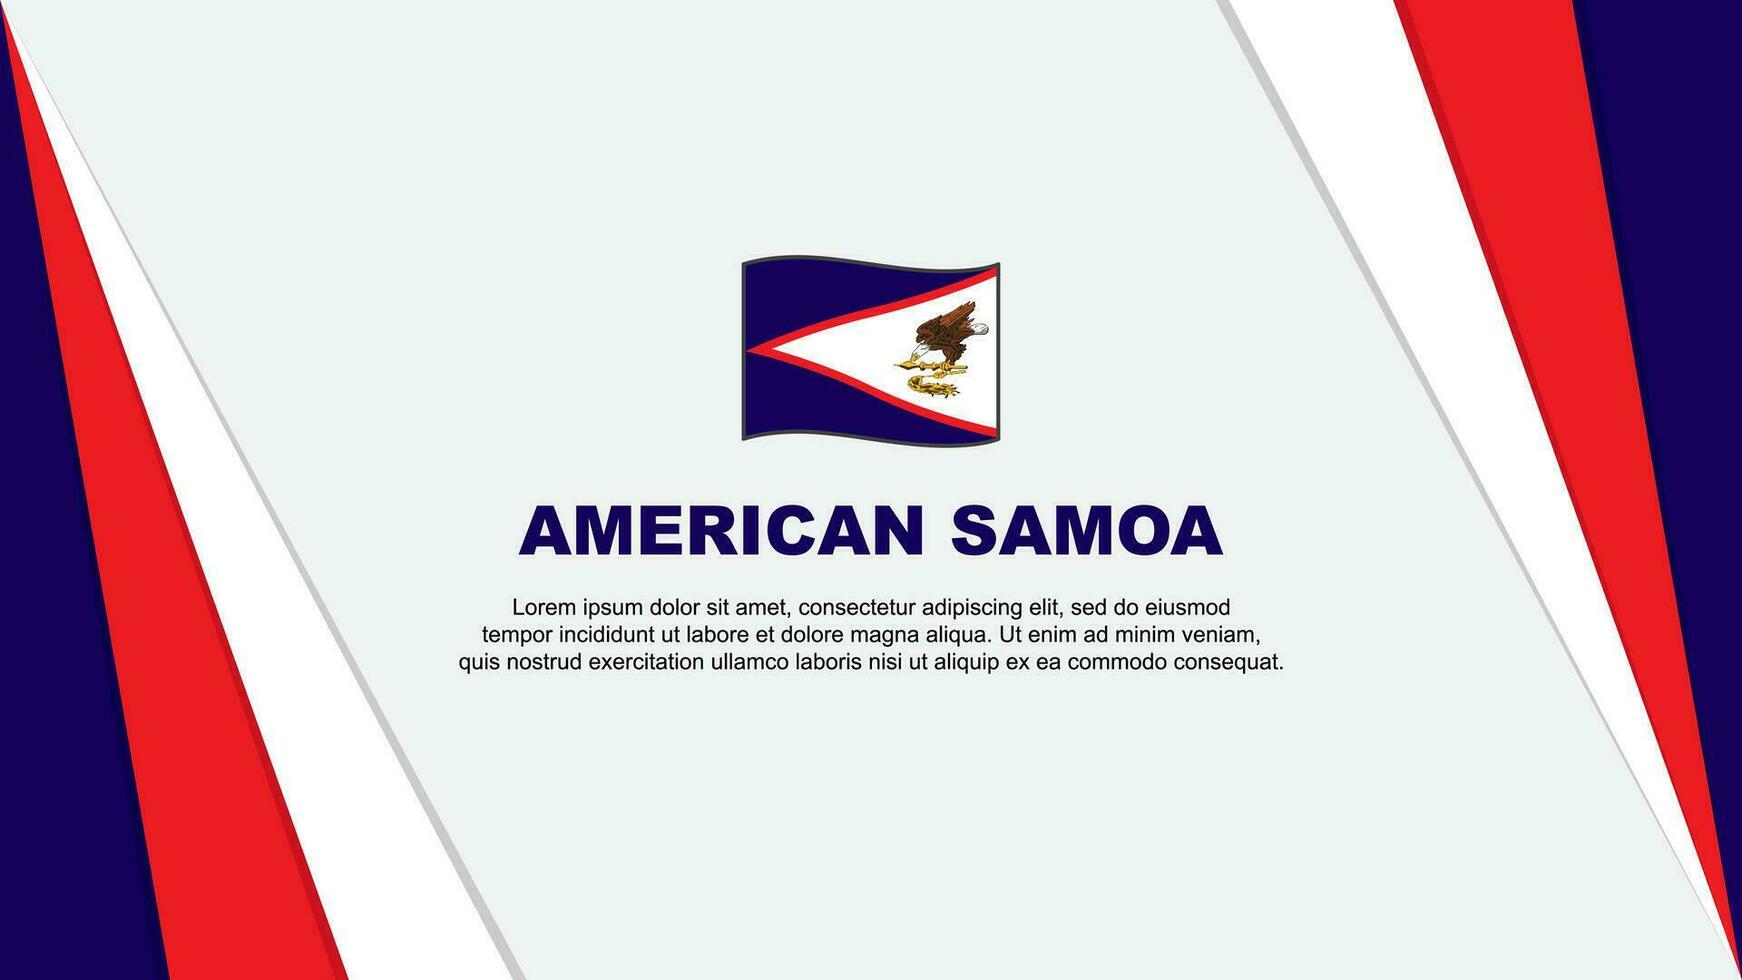 American Samoa Flag Abstract Background Design Template. American Samoa Independence Day Banner Cartoon Vector Illustration. American Samoa Flag